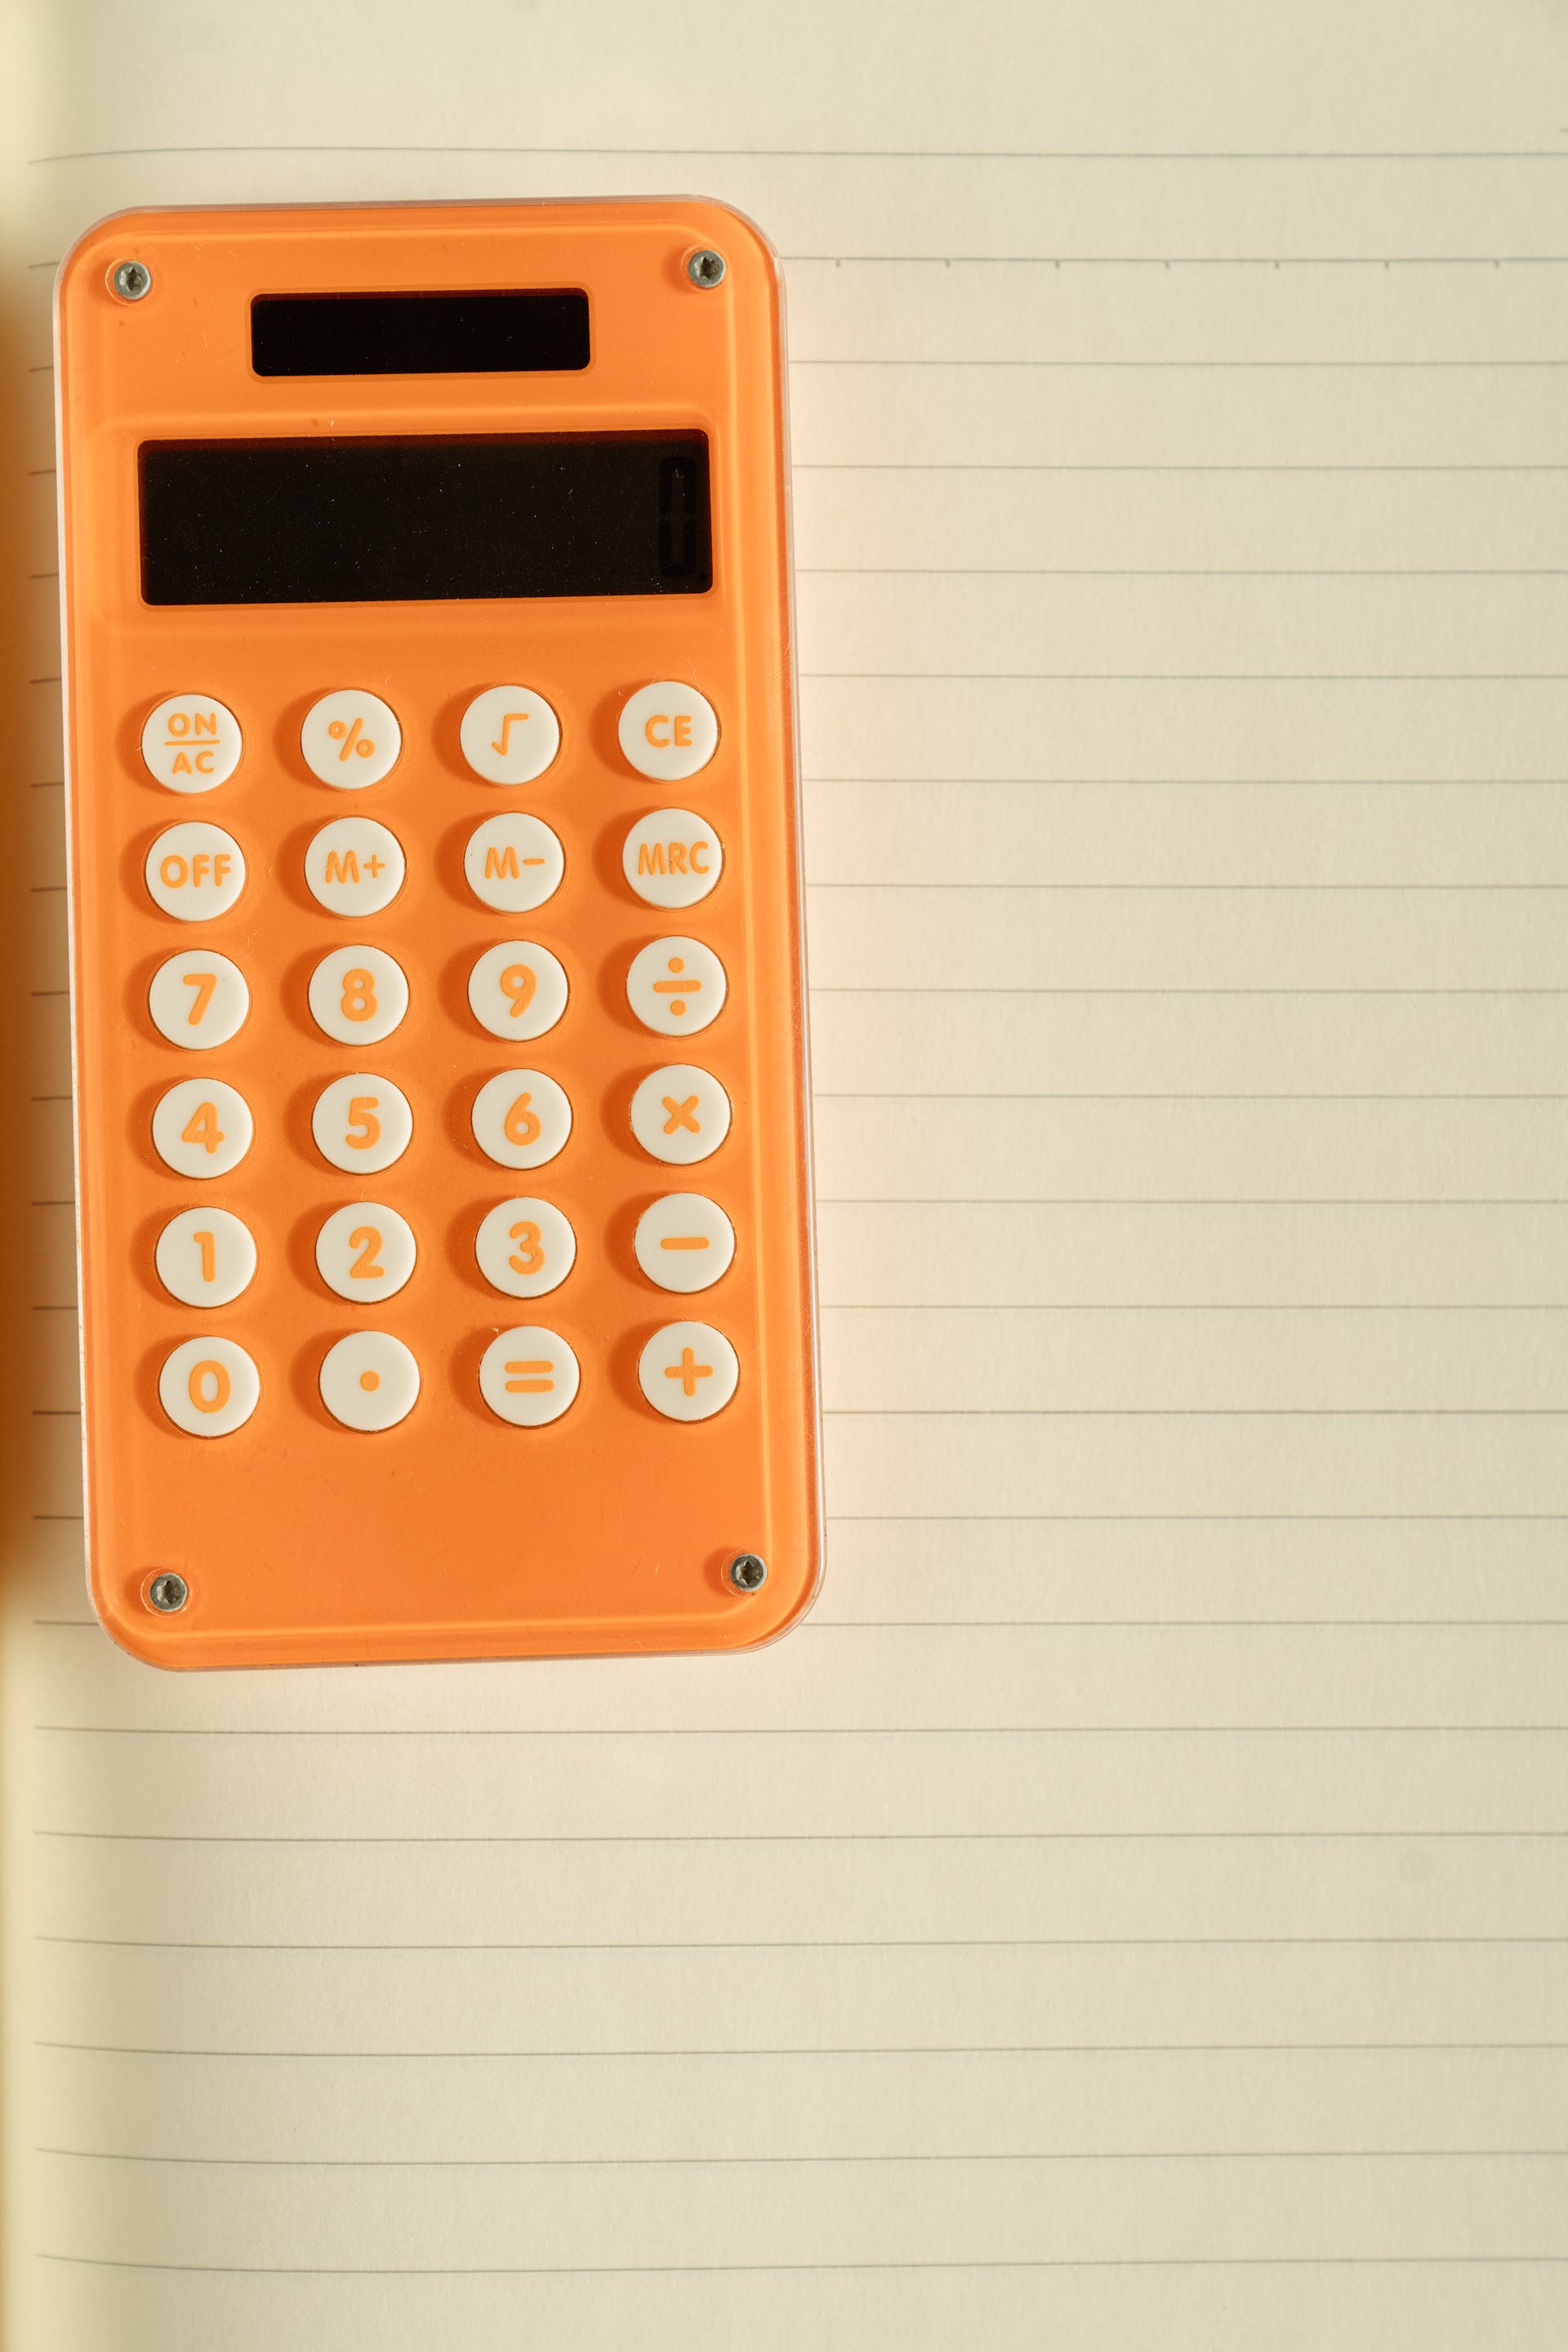 An orange calculator on white paper | Source: Pexels